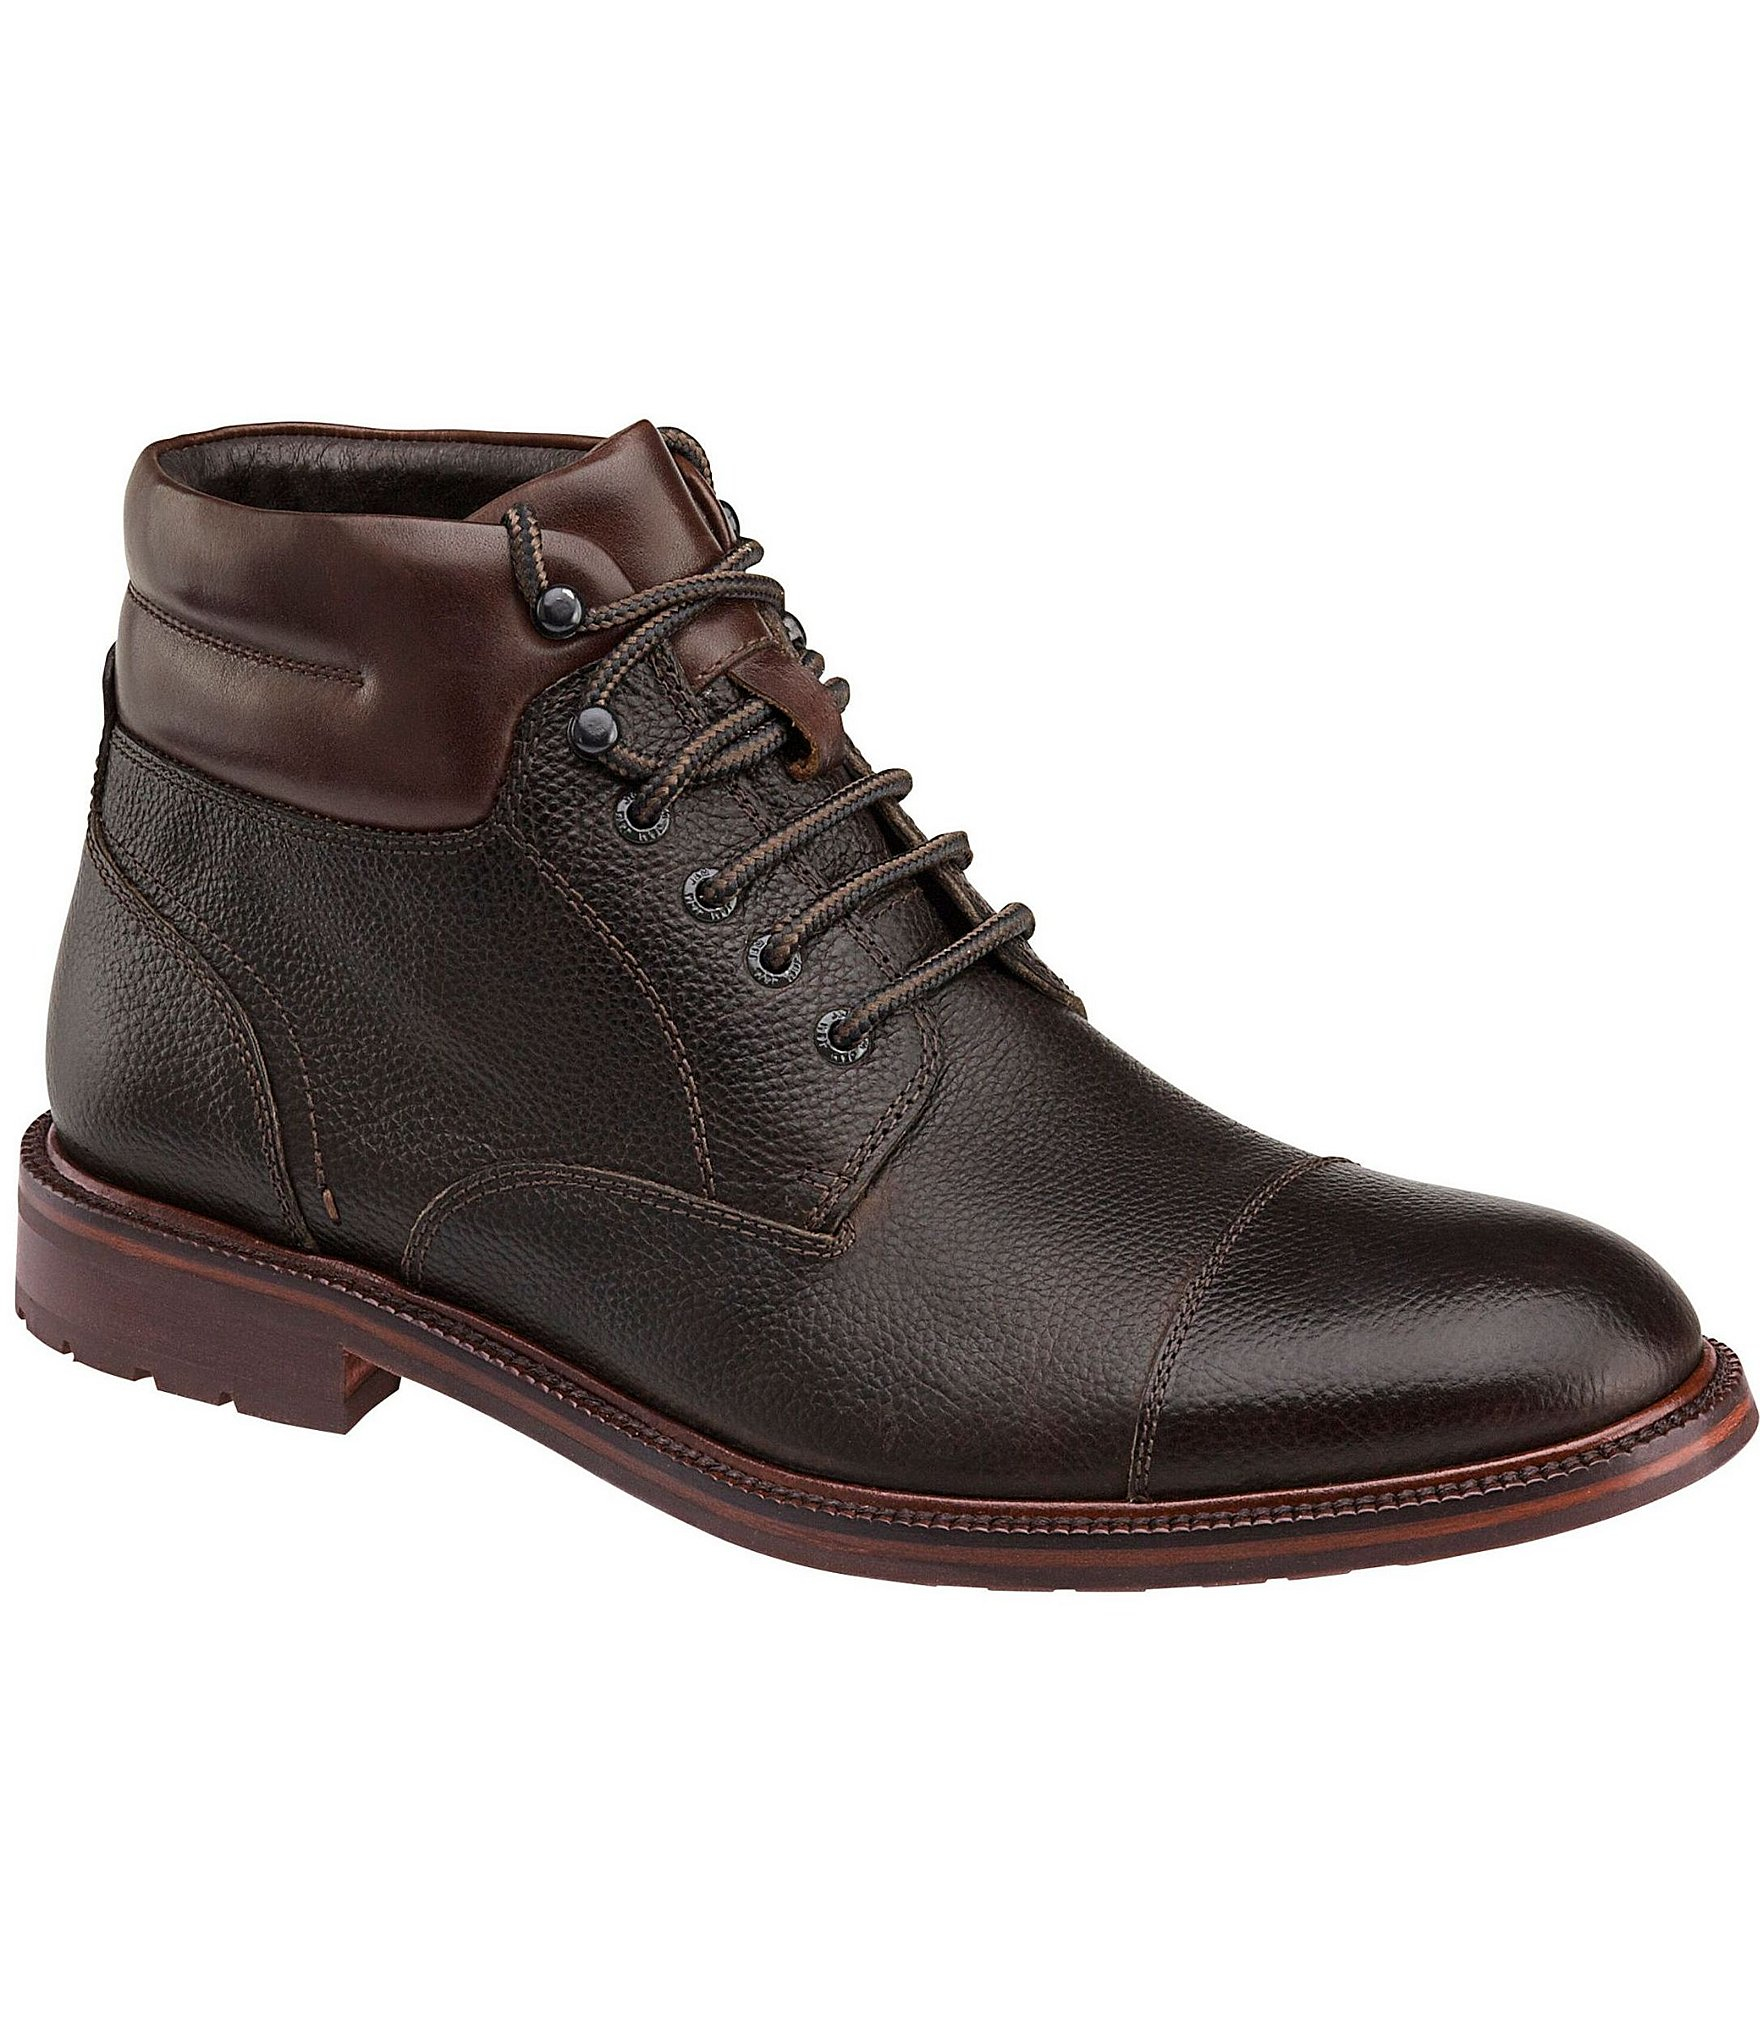 Lyst - Johnston & Murphy J&m Est. 1850 Men´s Fulton Boots in Brown for Men